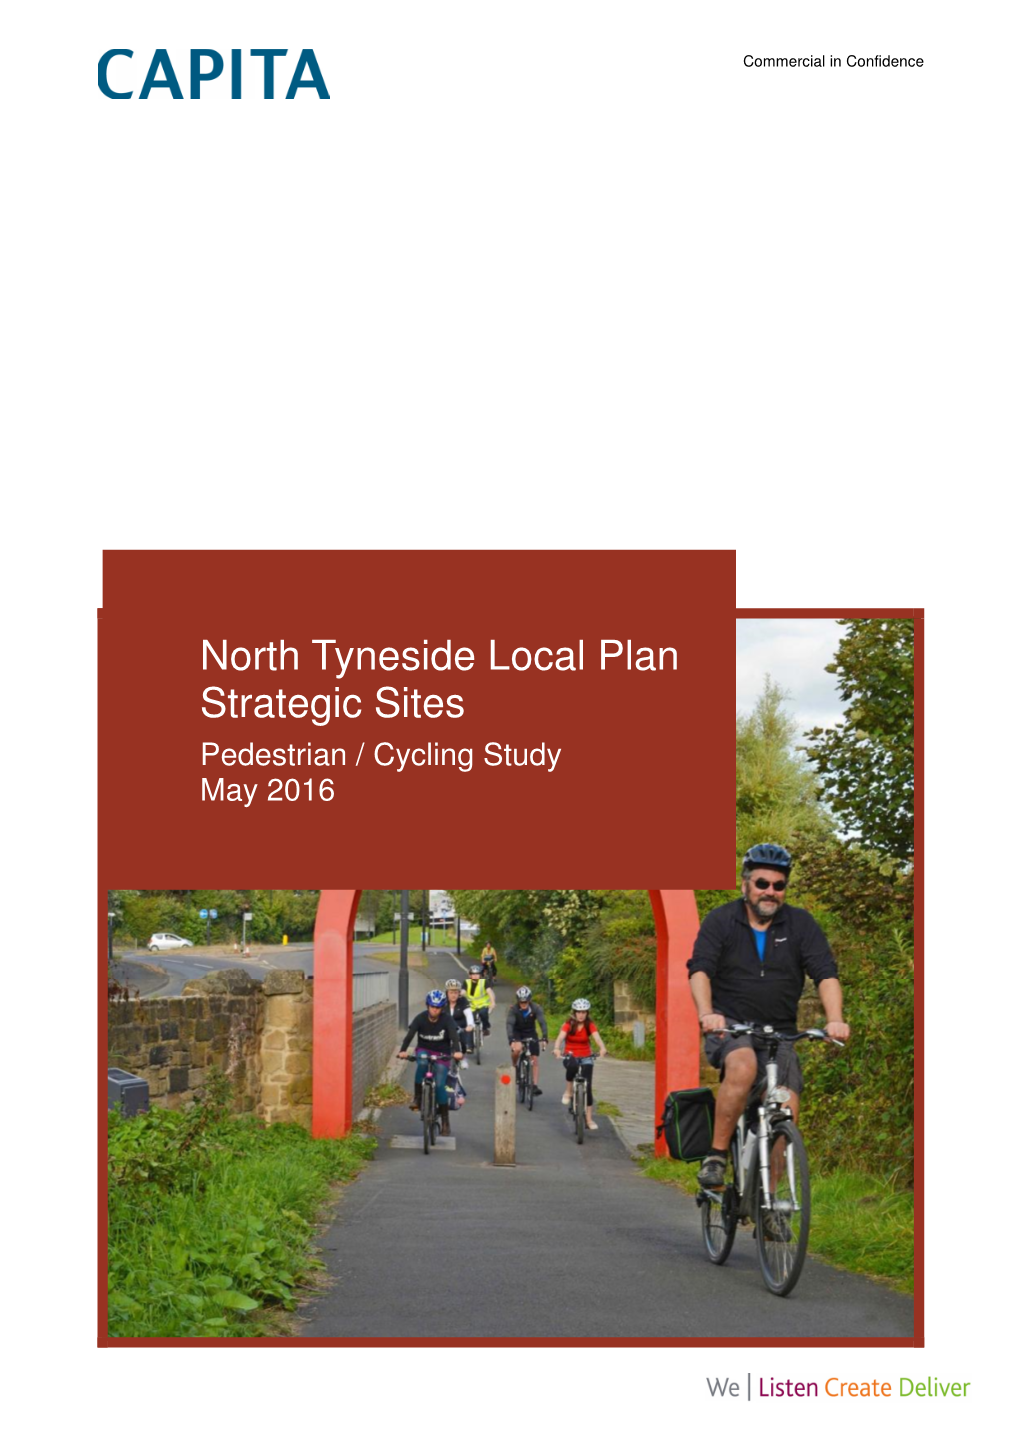 North Tyneside Local Plan Strategic Sites Pedestrian / Cycling Study May 2016